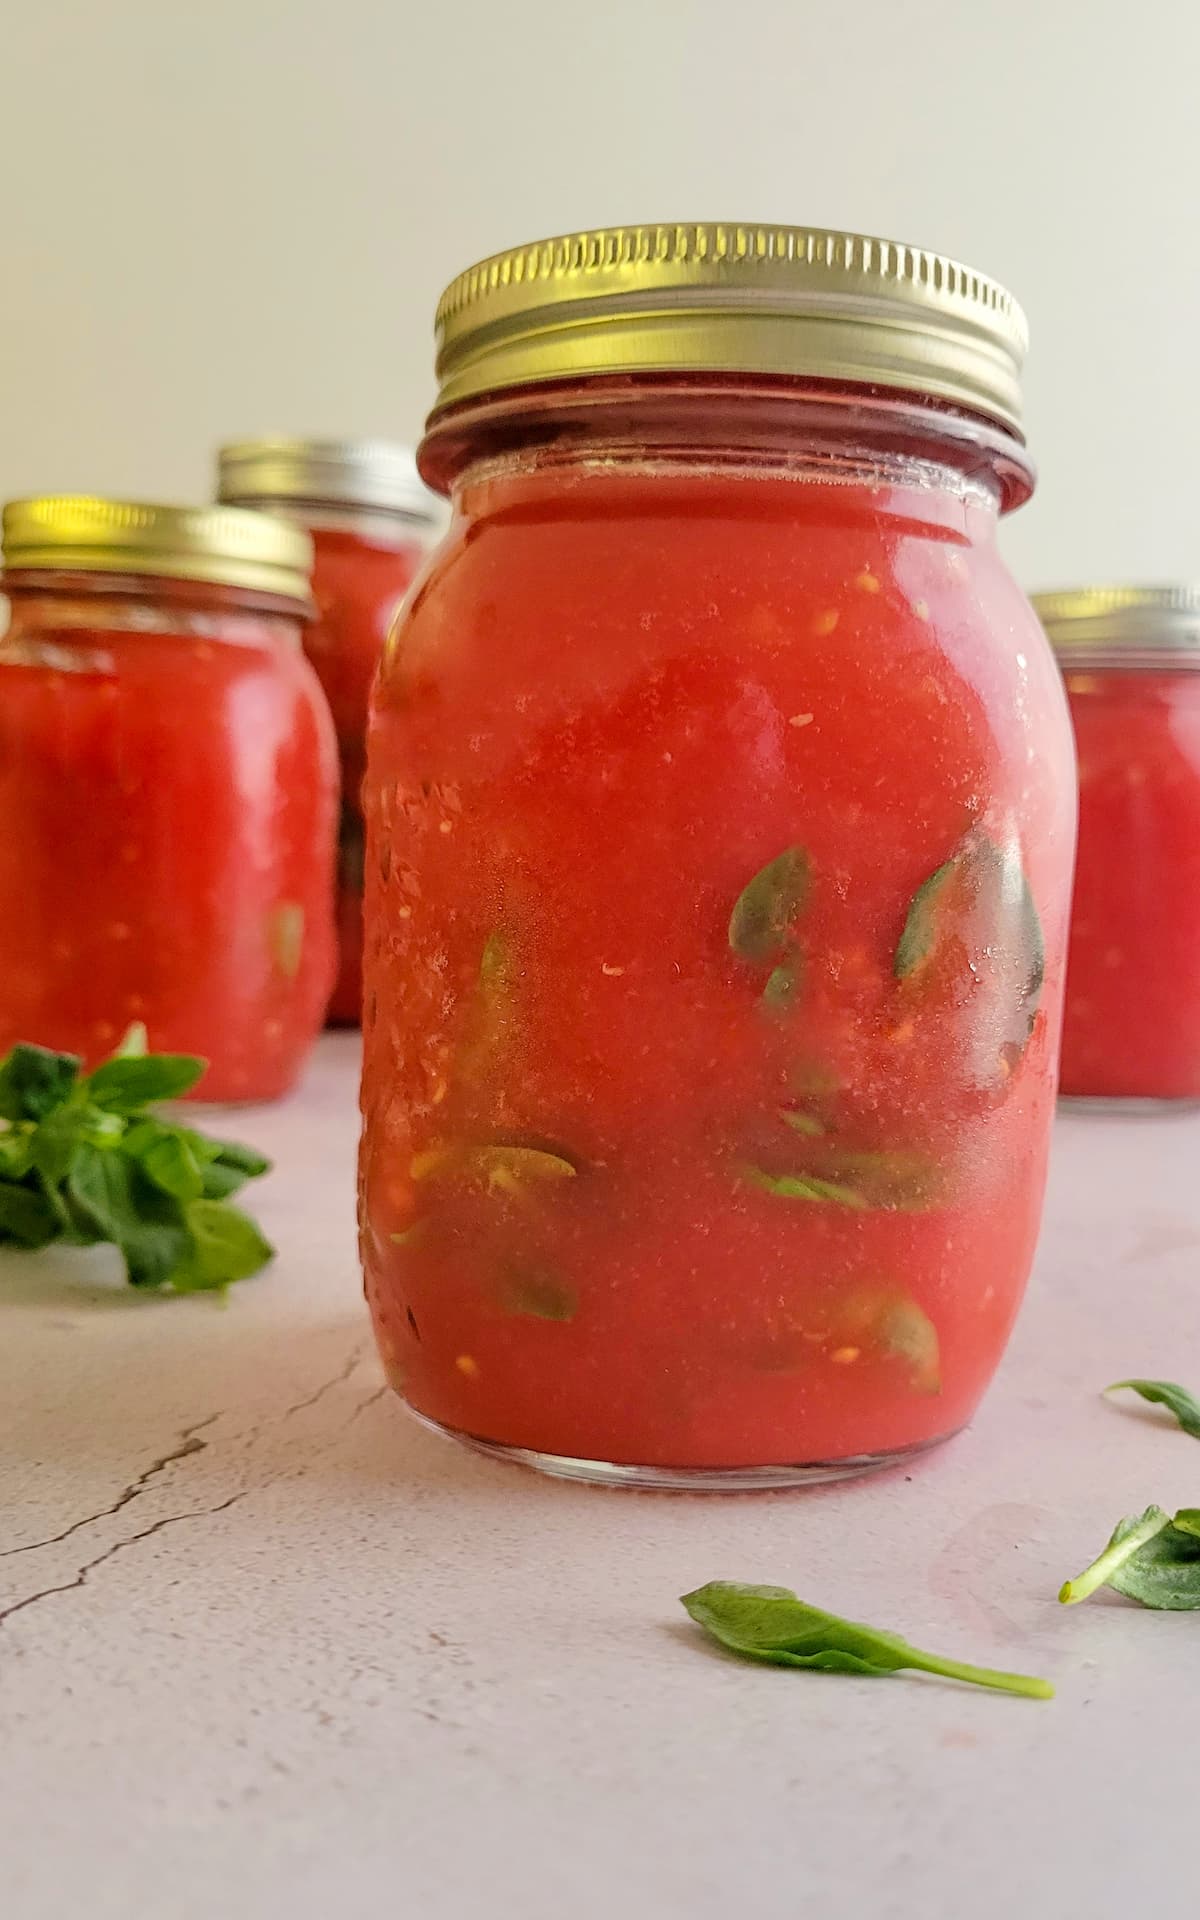 jars of tomato sauce with basil